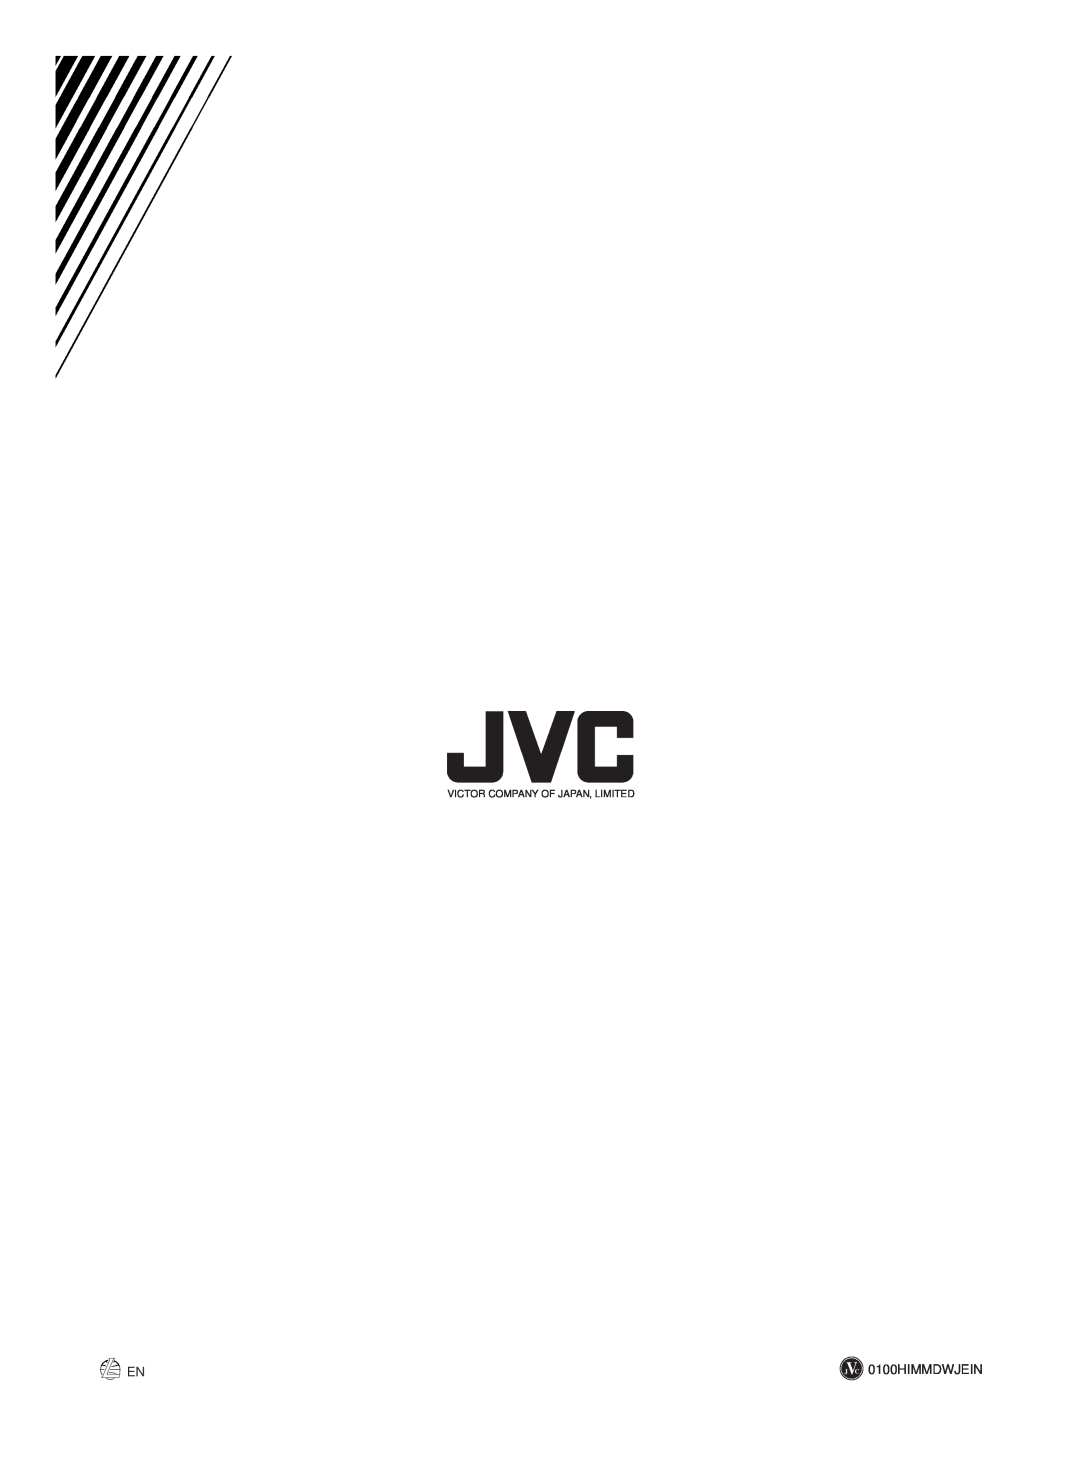 JVC RX-8000VBK manual JVC 0100HIMMDWJEIN, Victor Company Of Japan, Limited 